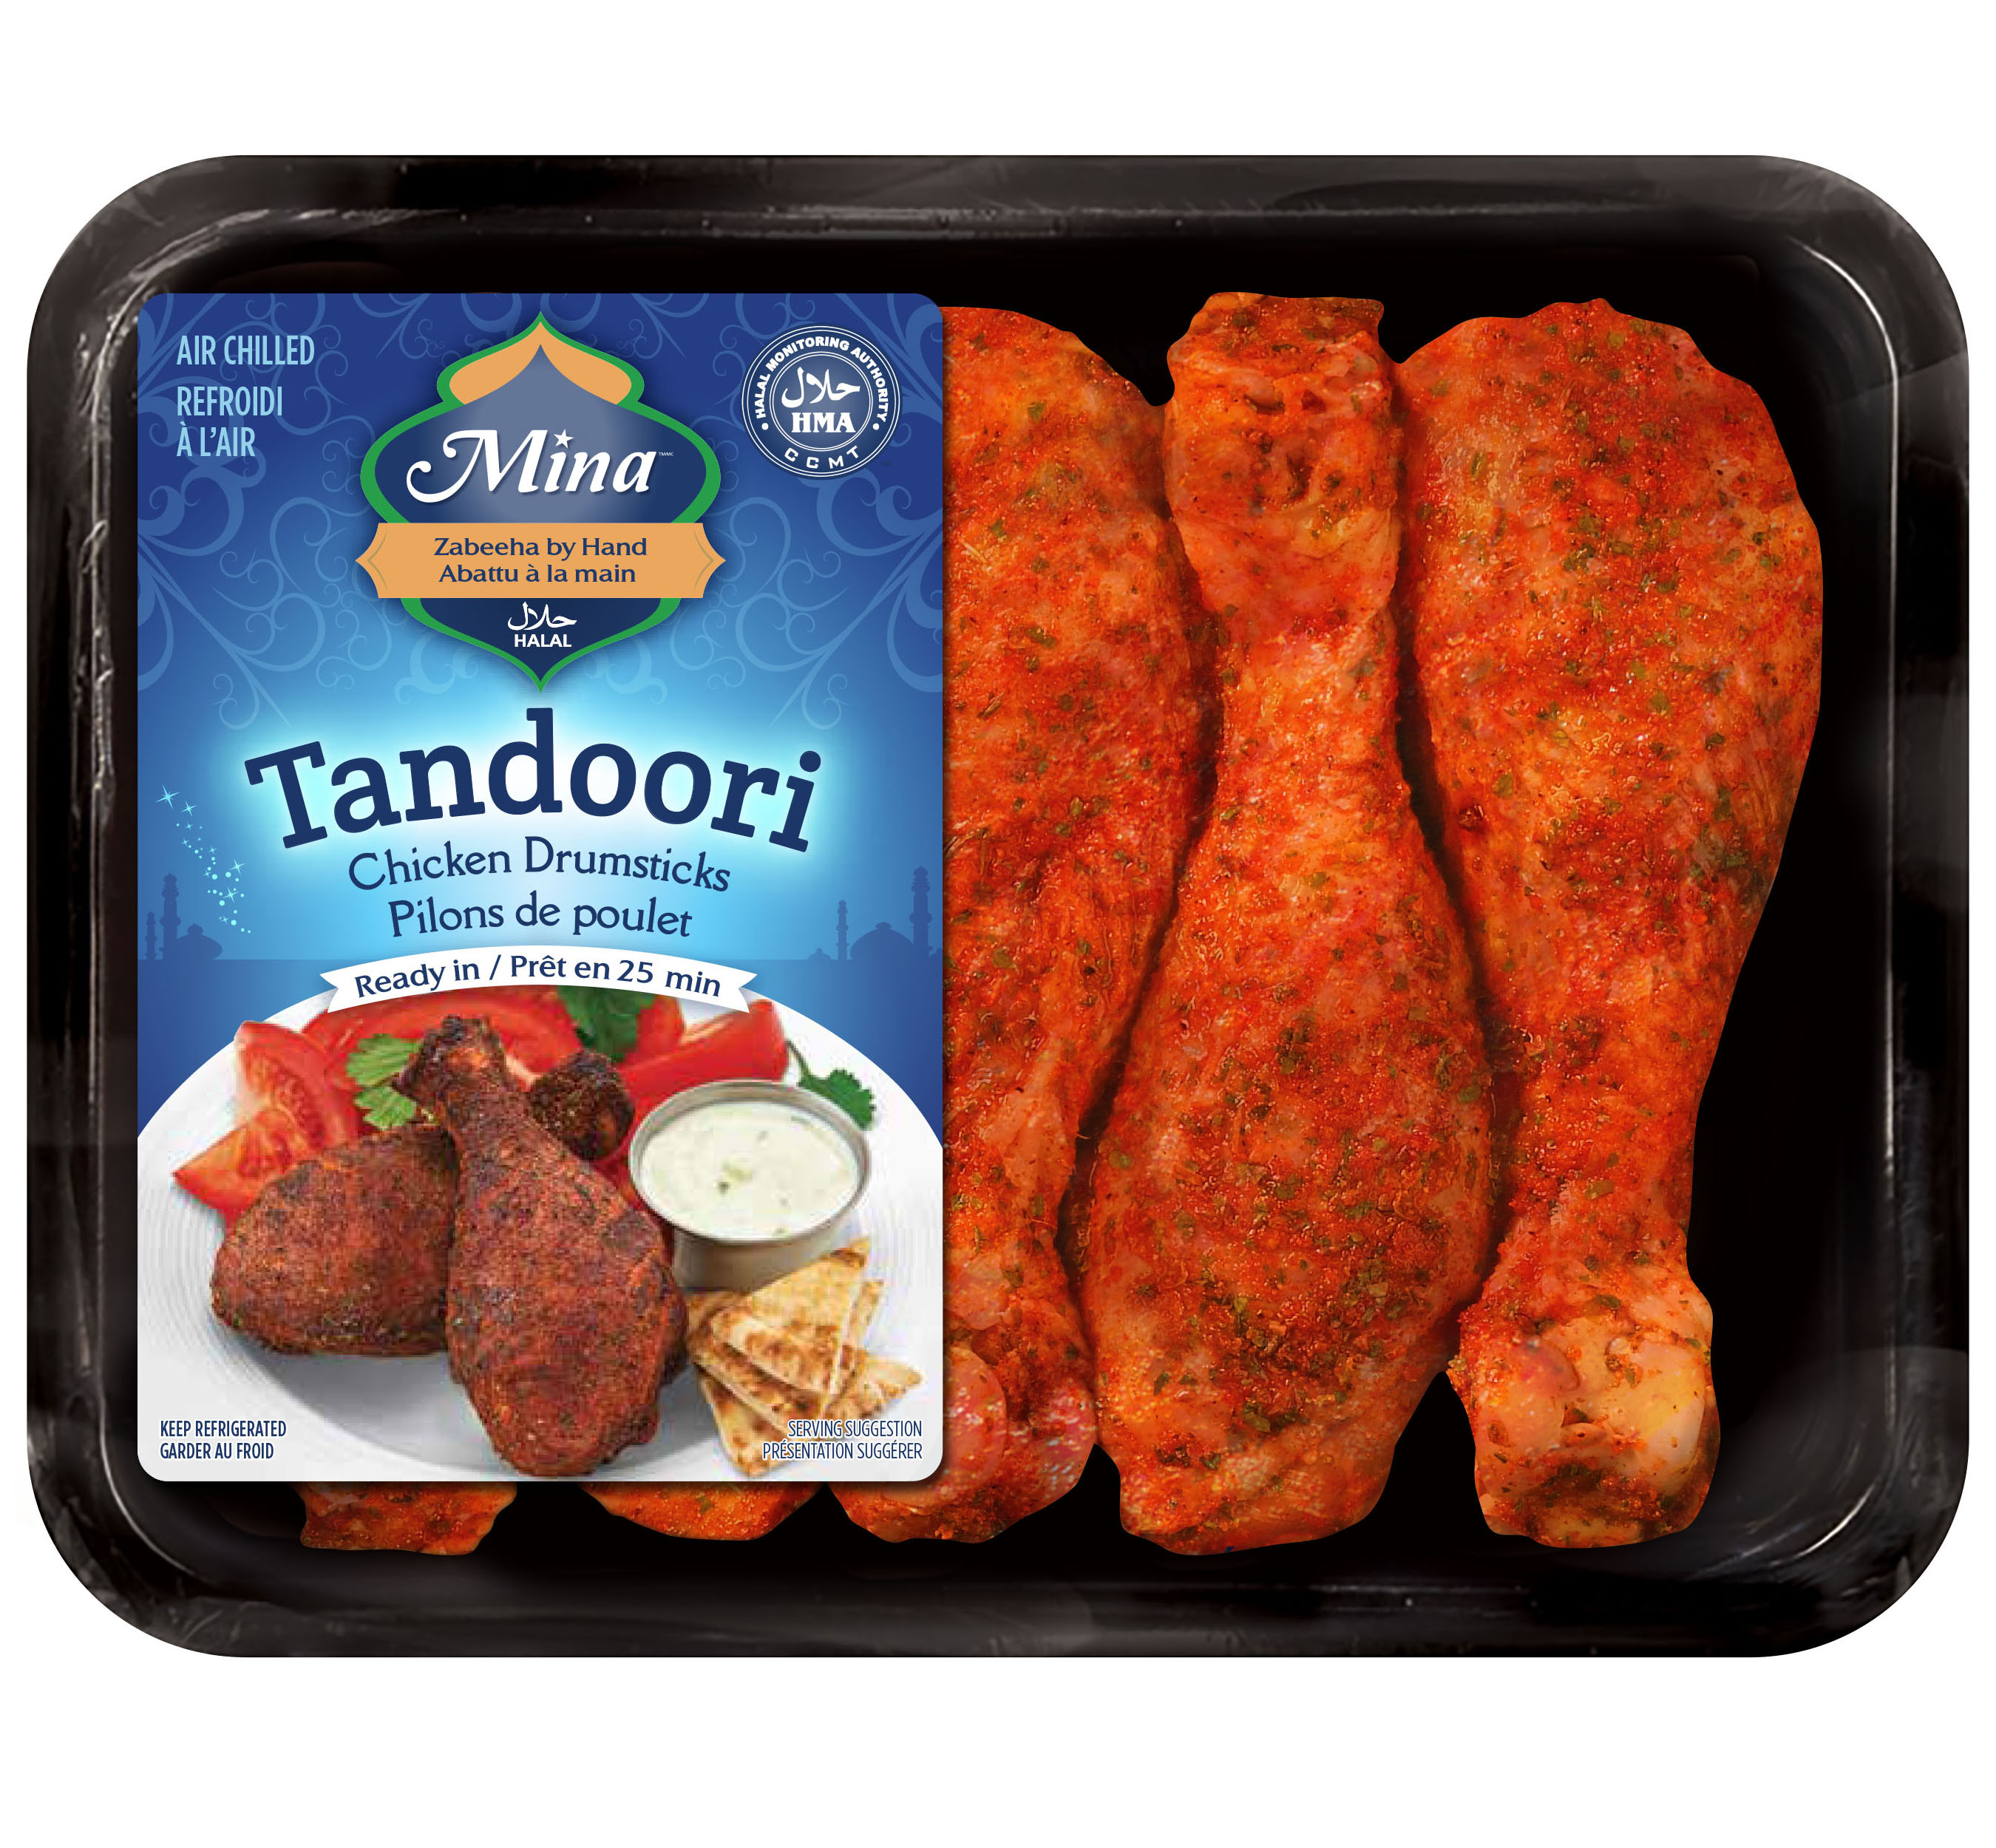 Tandoori pilons de poulet